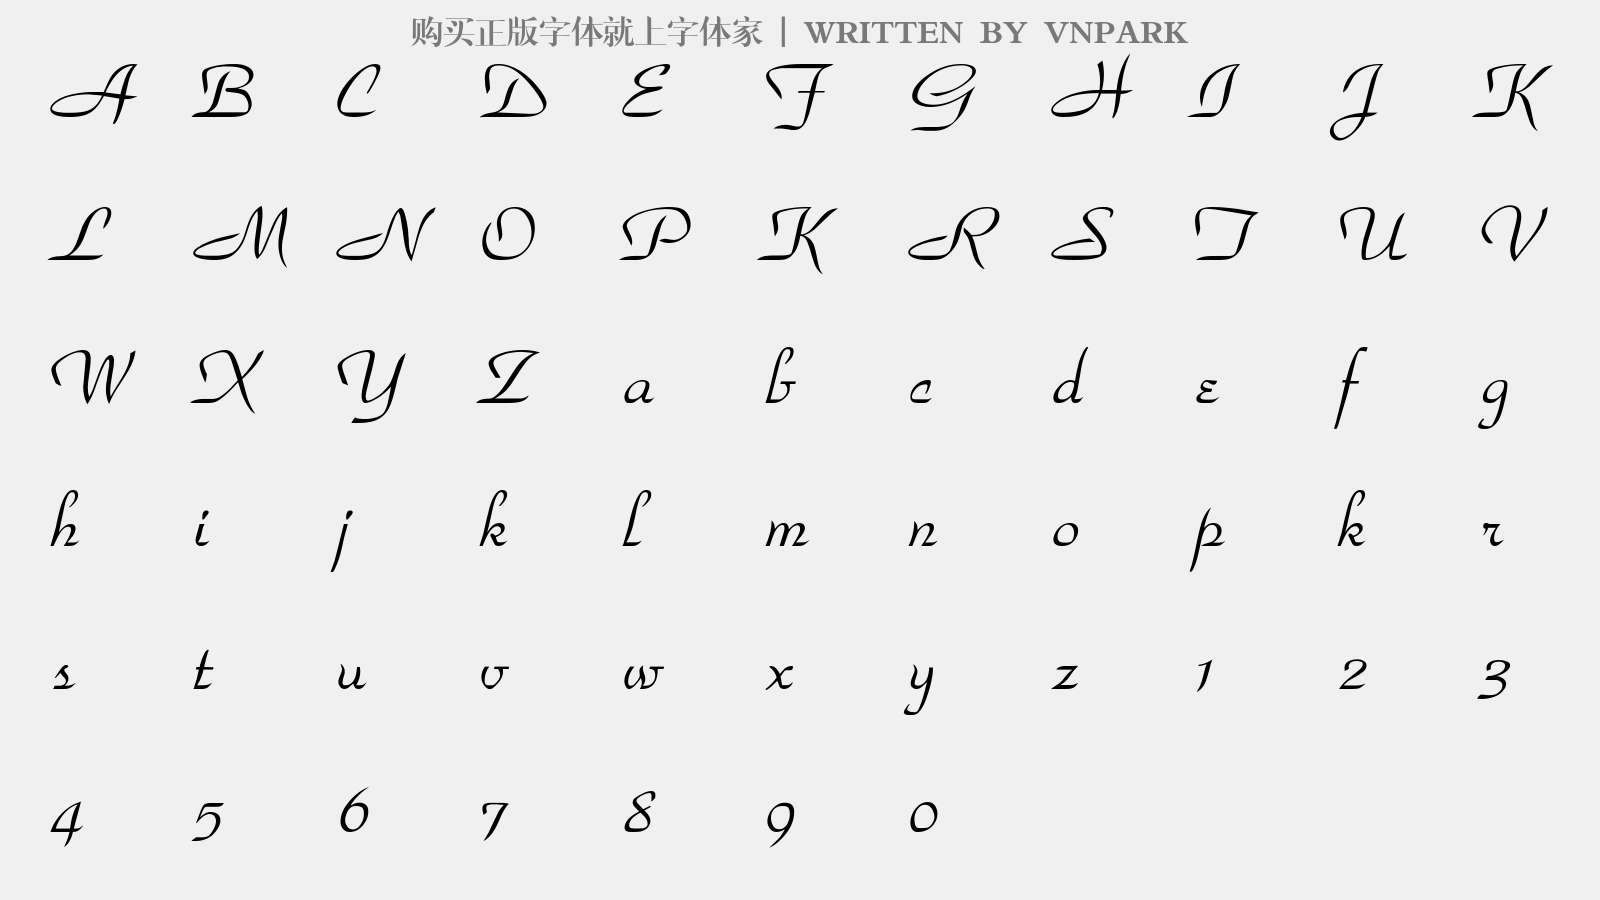 VNPARK - 大写字母/小写字母/数字